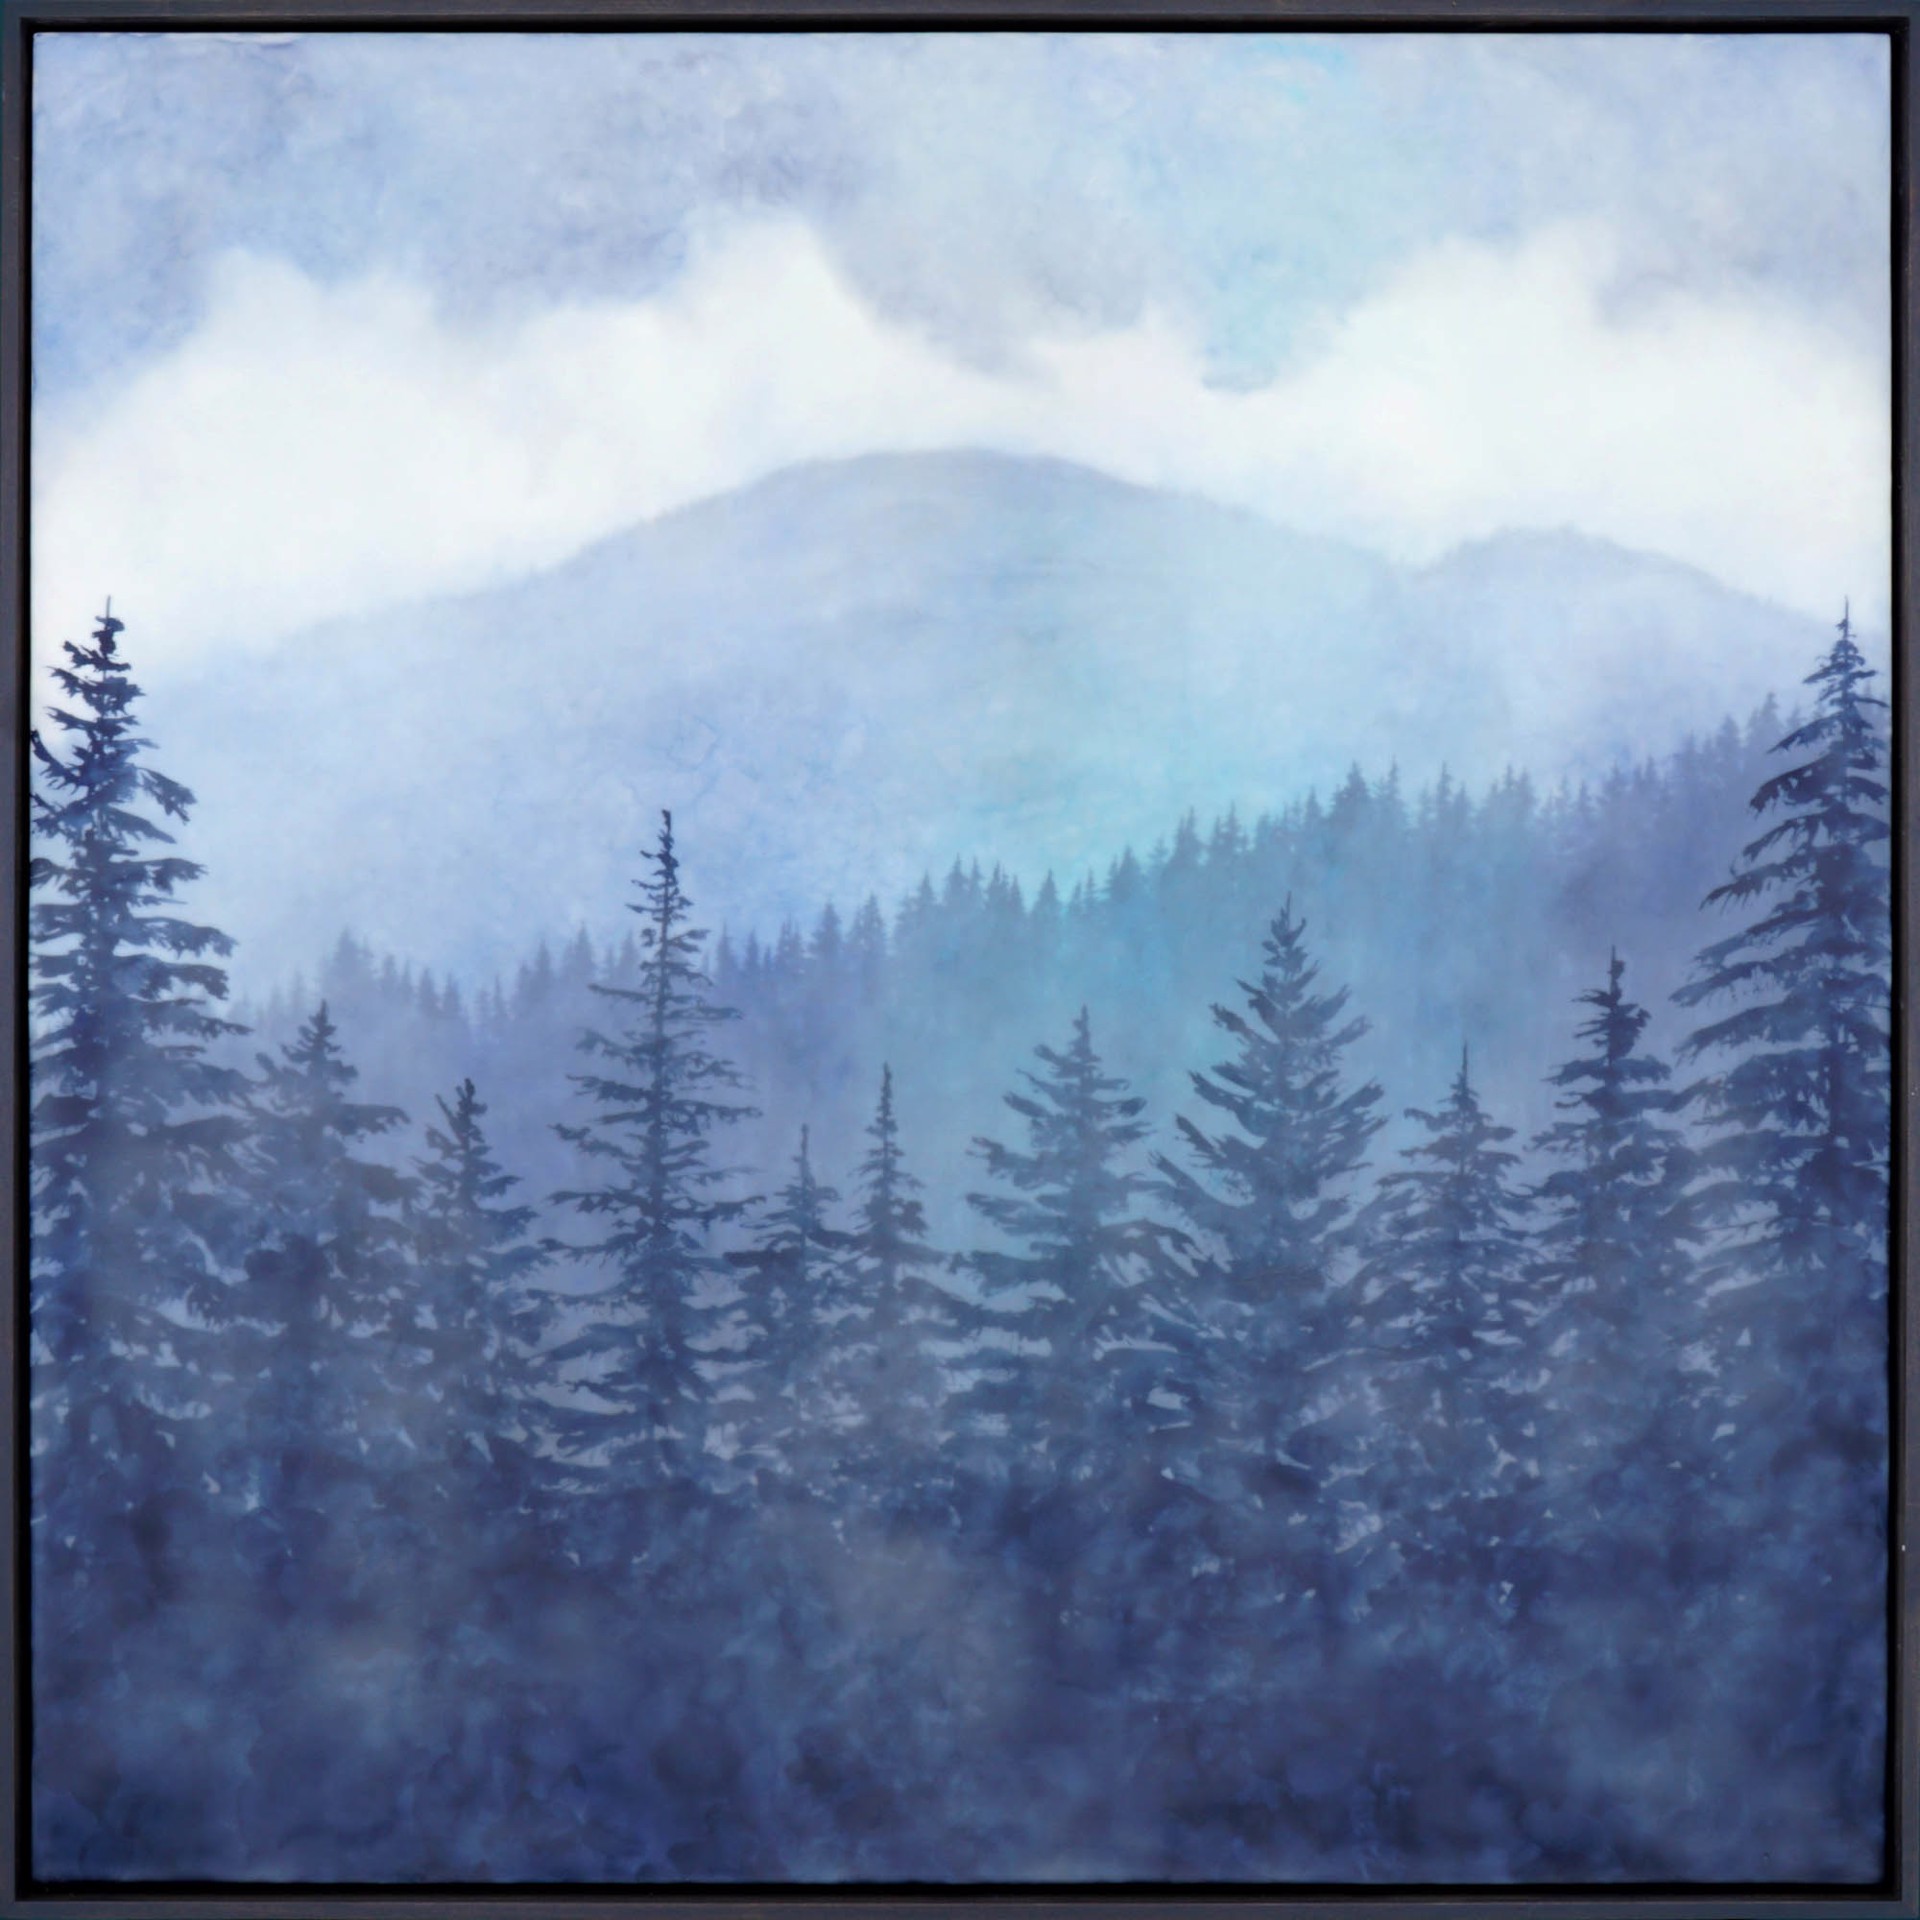 Original Encaustic Painting By Bridgette Meinhold Featuring a Mountain Peak Through Misty Pine Trees